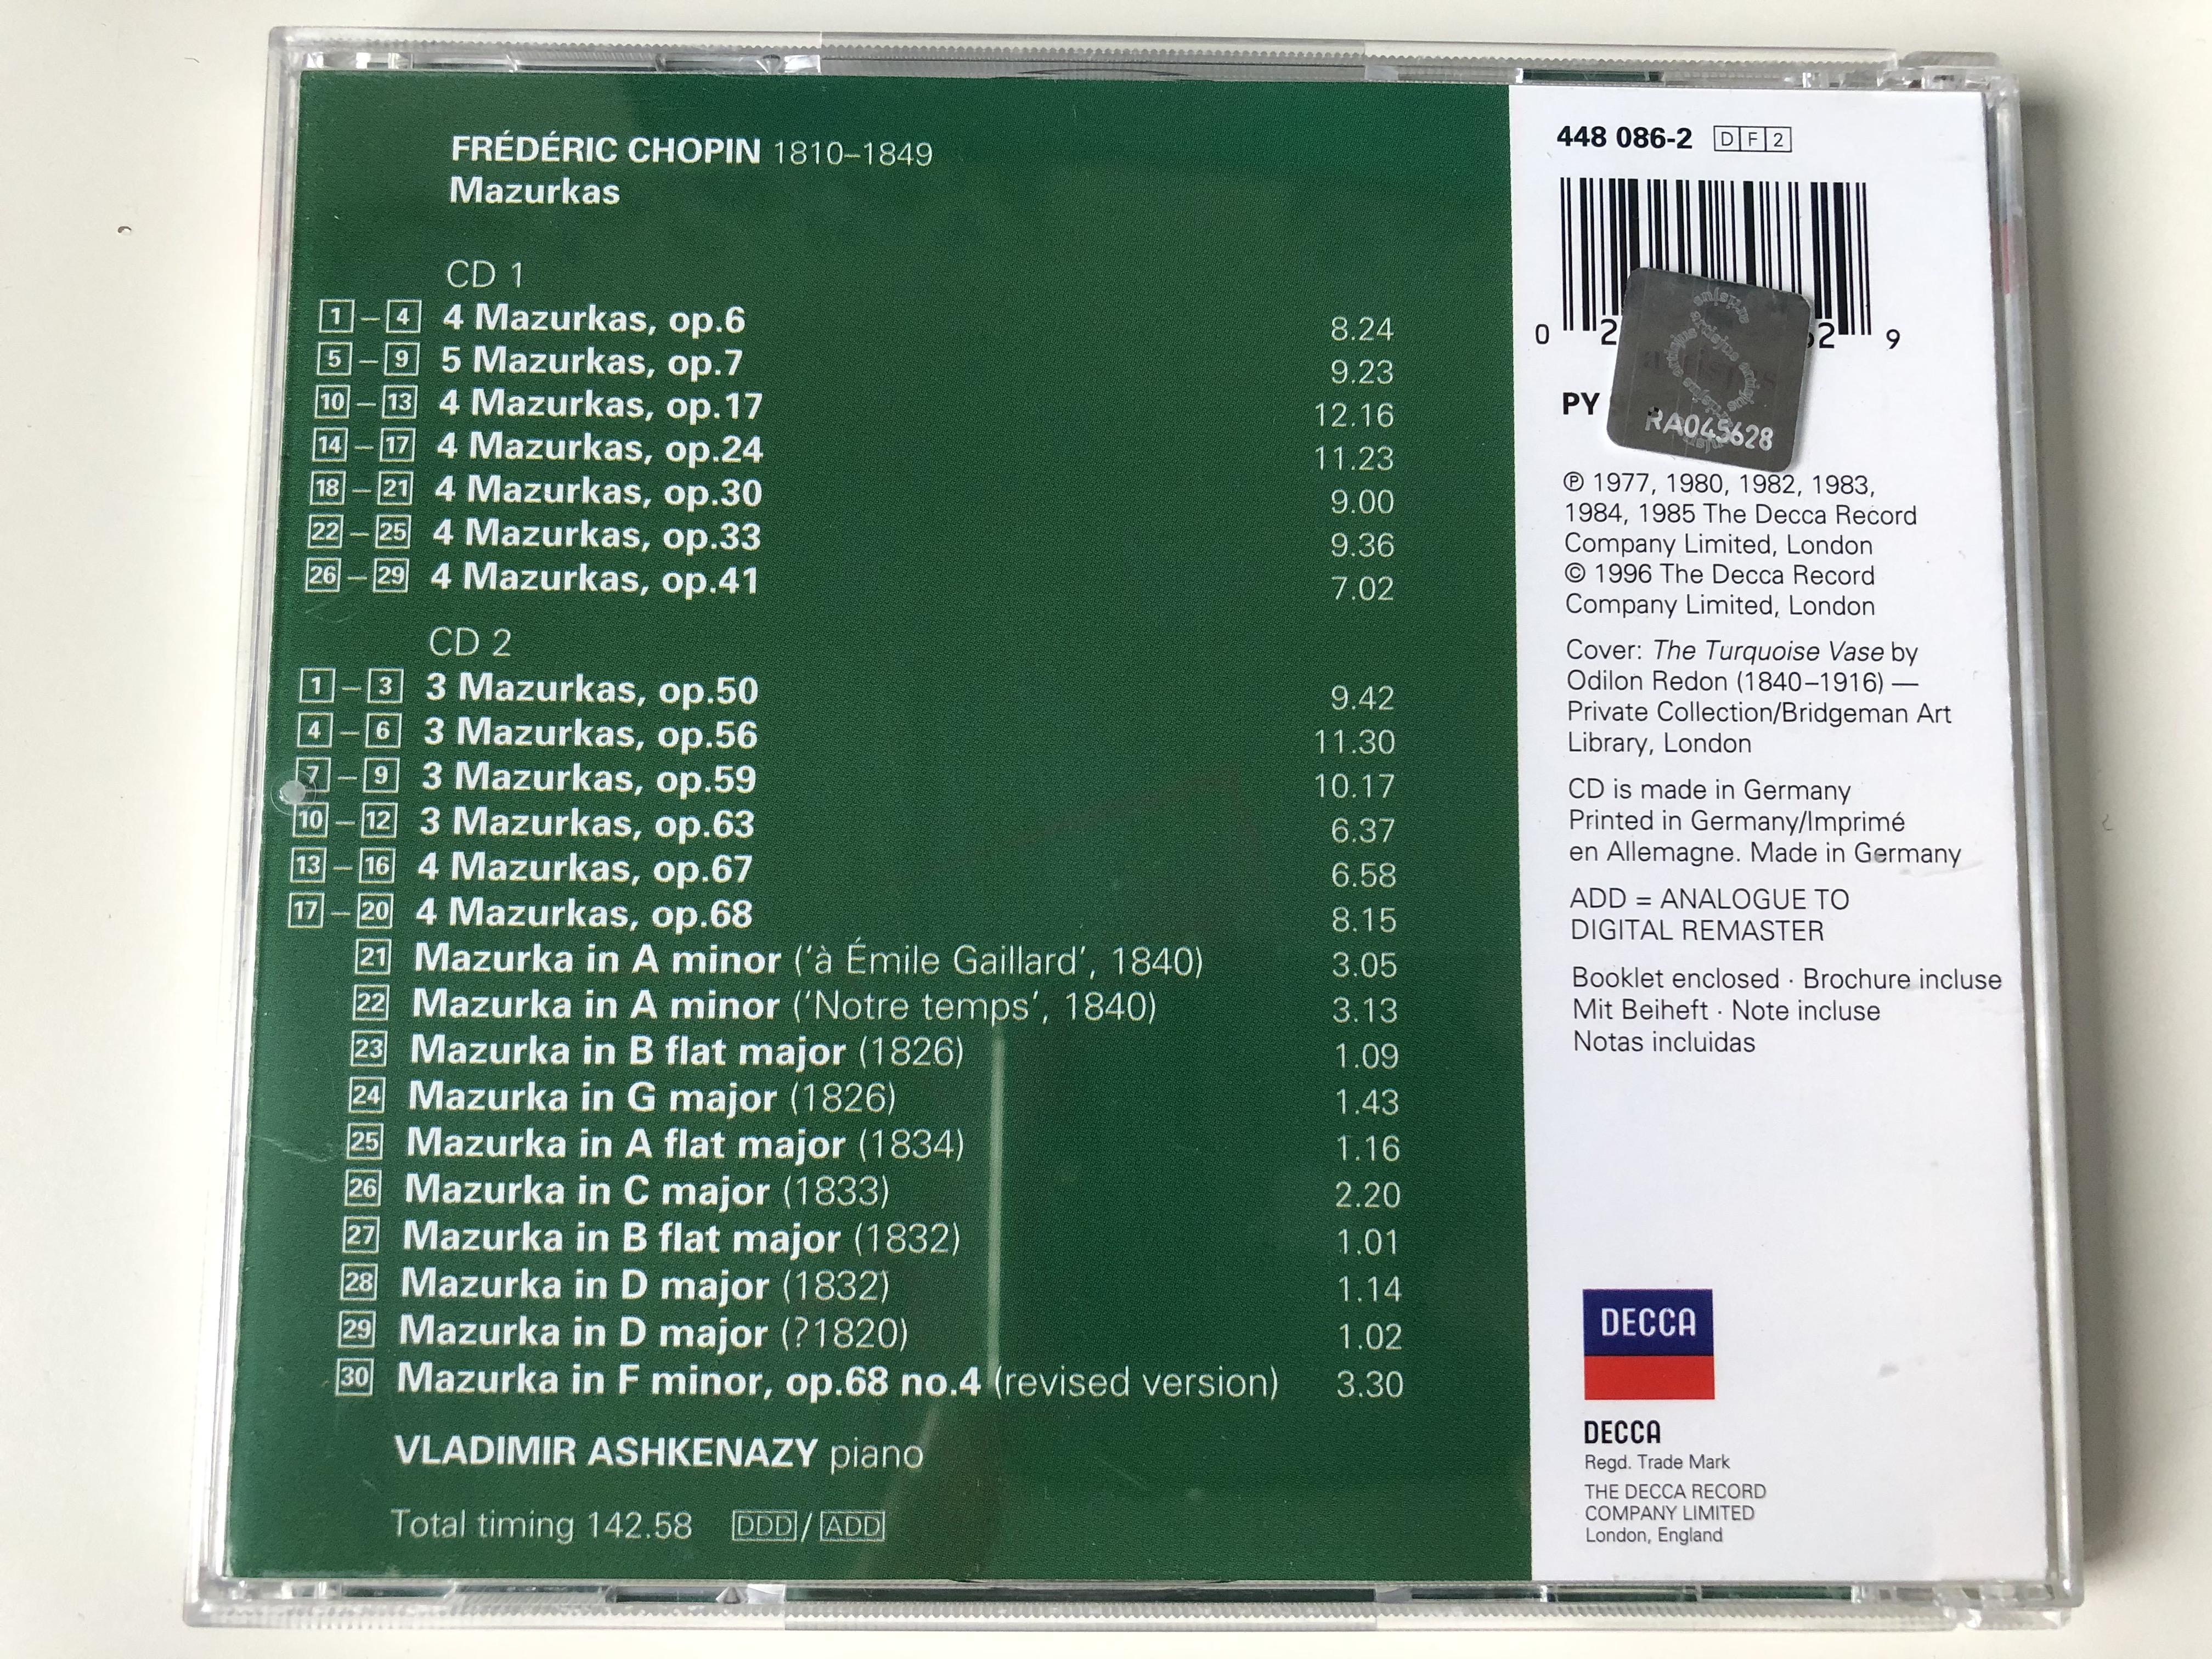 chopin-mazurkas-vladimir-ashkenazy-double-decca-decca-2x-audio-cd-1996-448-086-2-7-.jpg